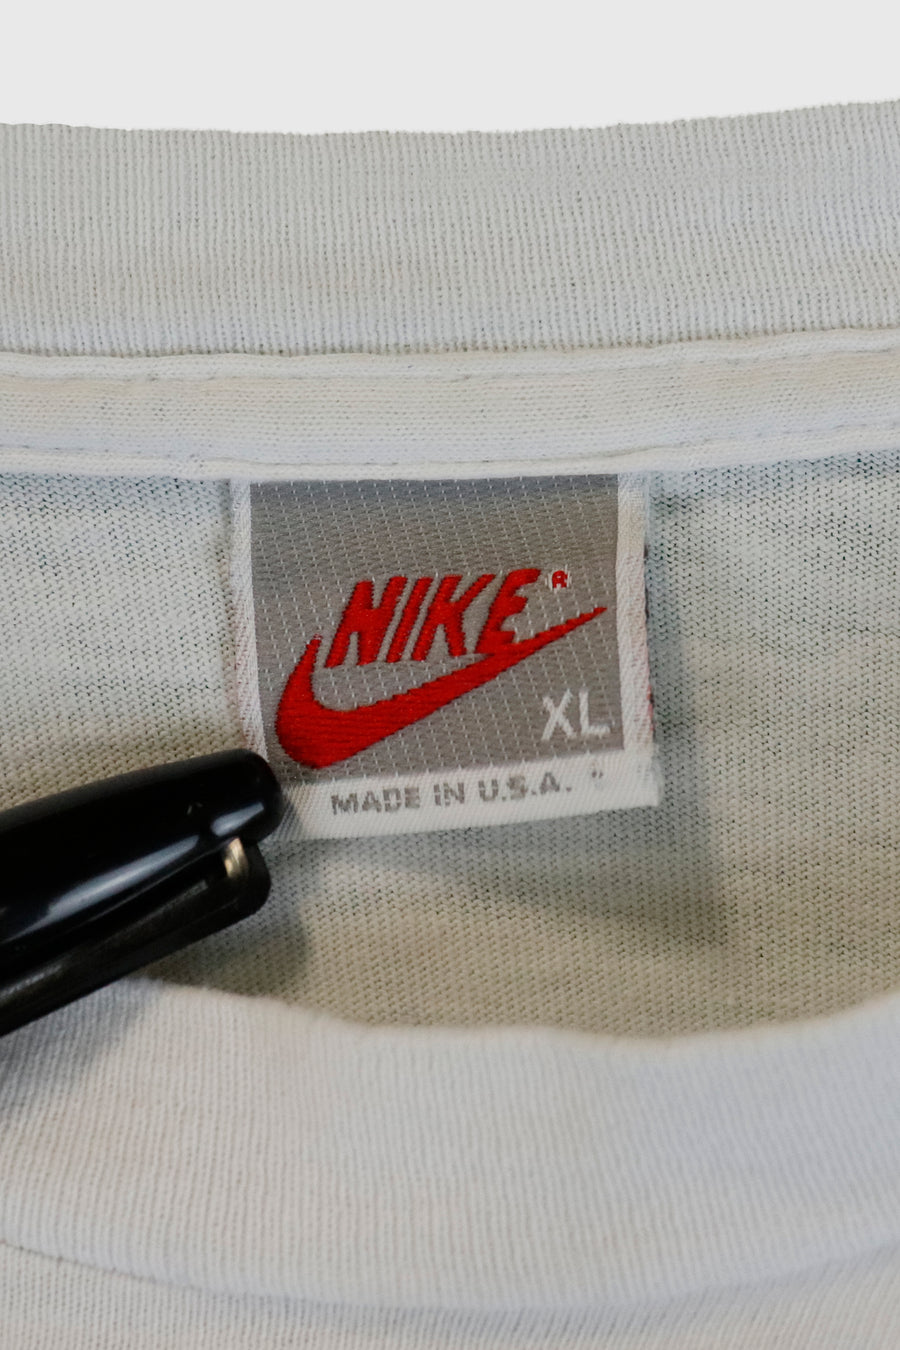 Vintage Nike Challenge Court Printed Back T Shirt Sz XL